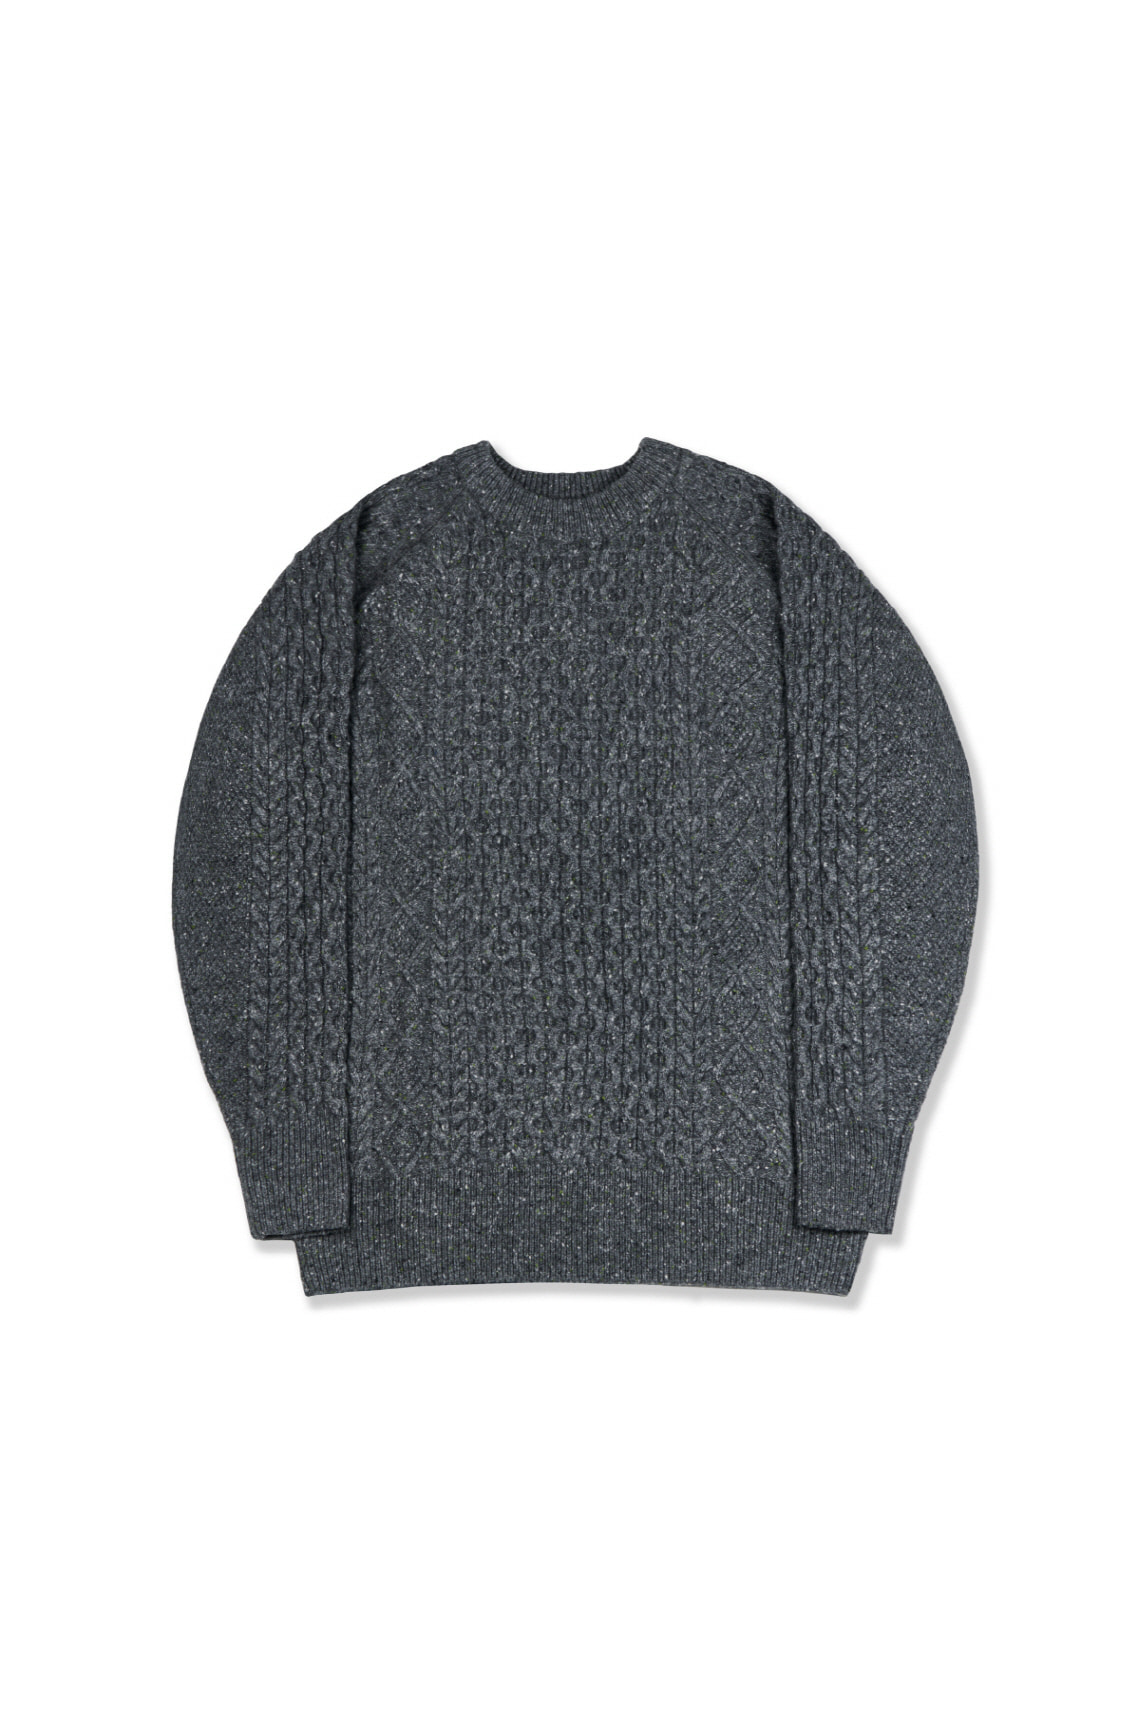 aran fisherman sweater (NEP)_gray